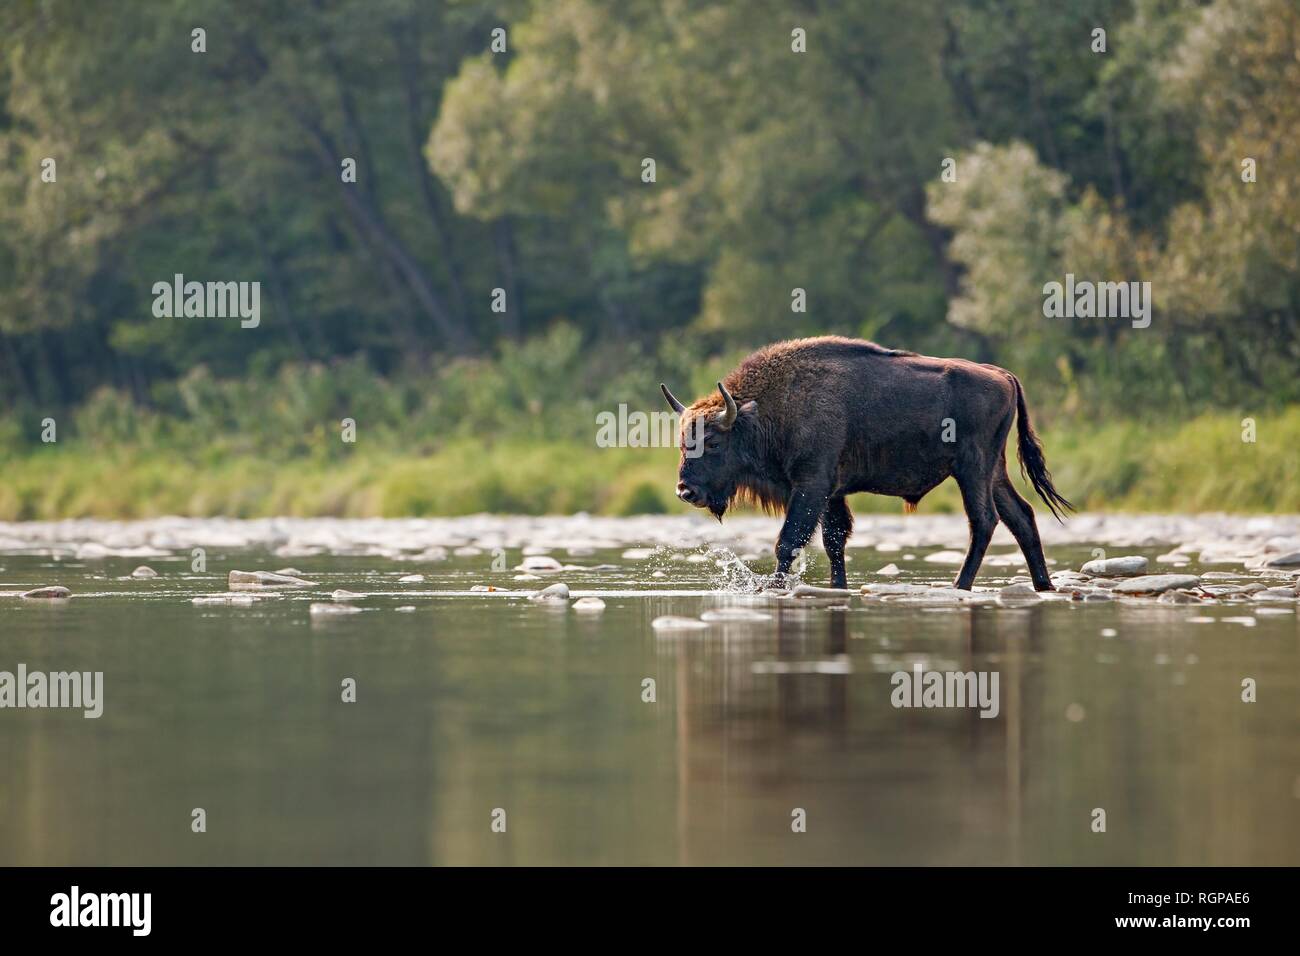 Bull of european bison, bison bonasus, crossing a river Stock Photo